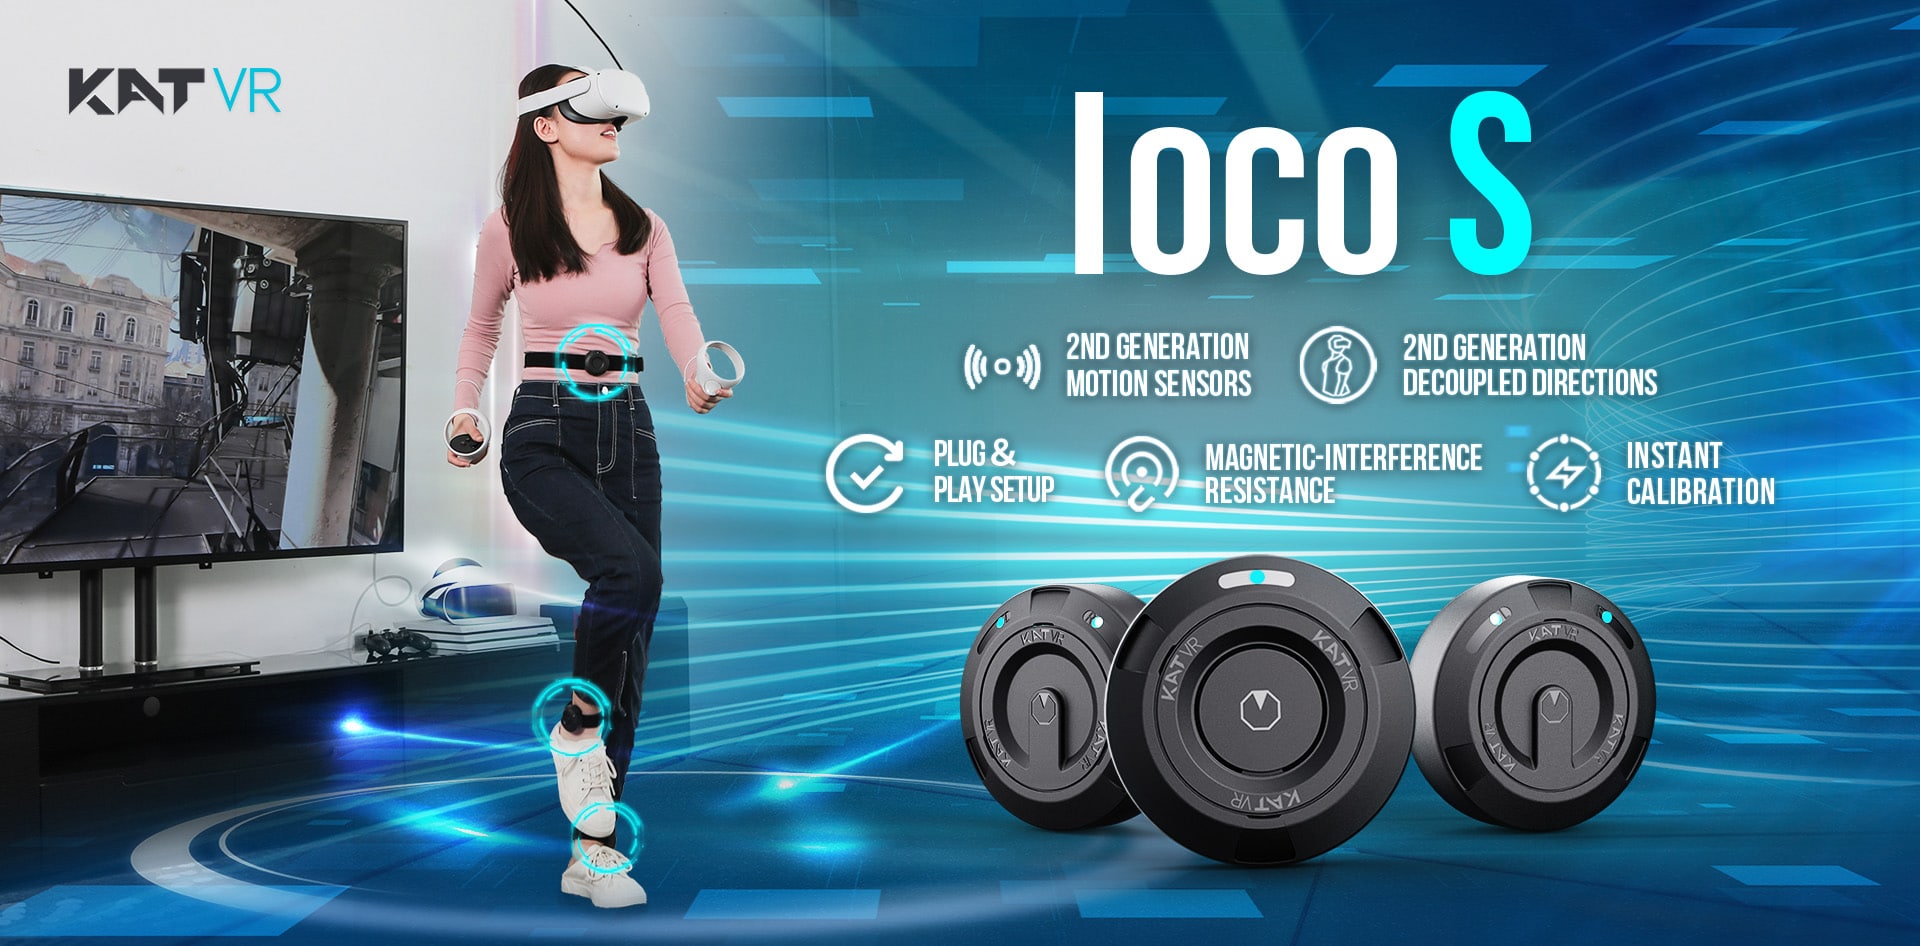 Kat VR Updates Wearable KAT Loco S